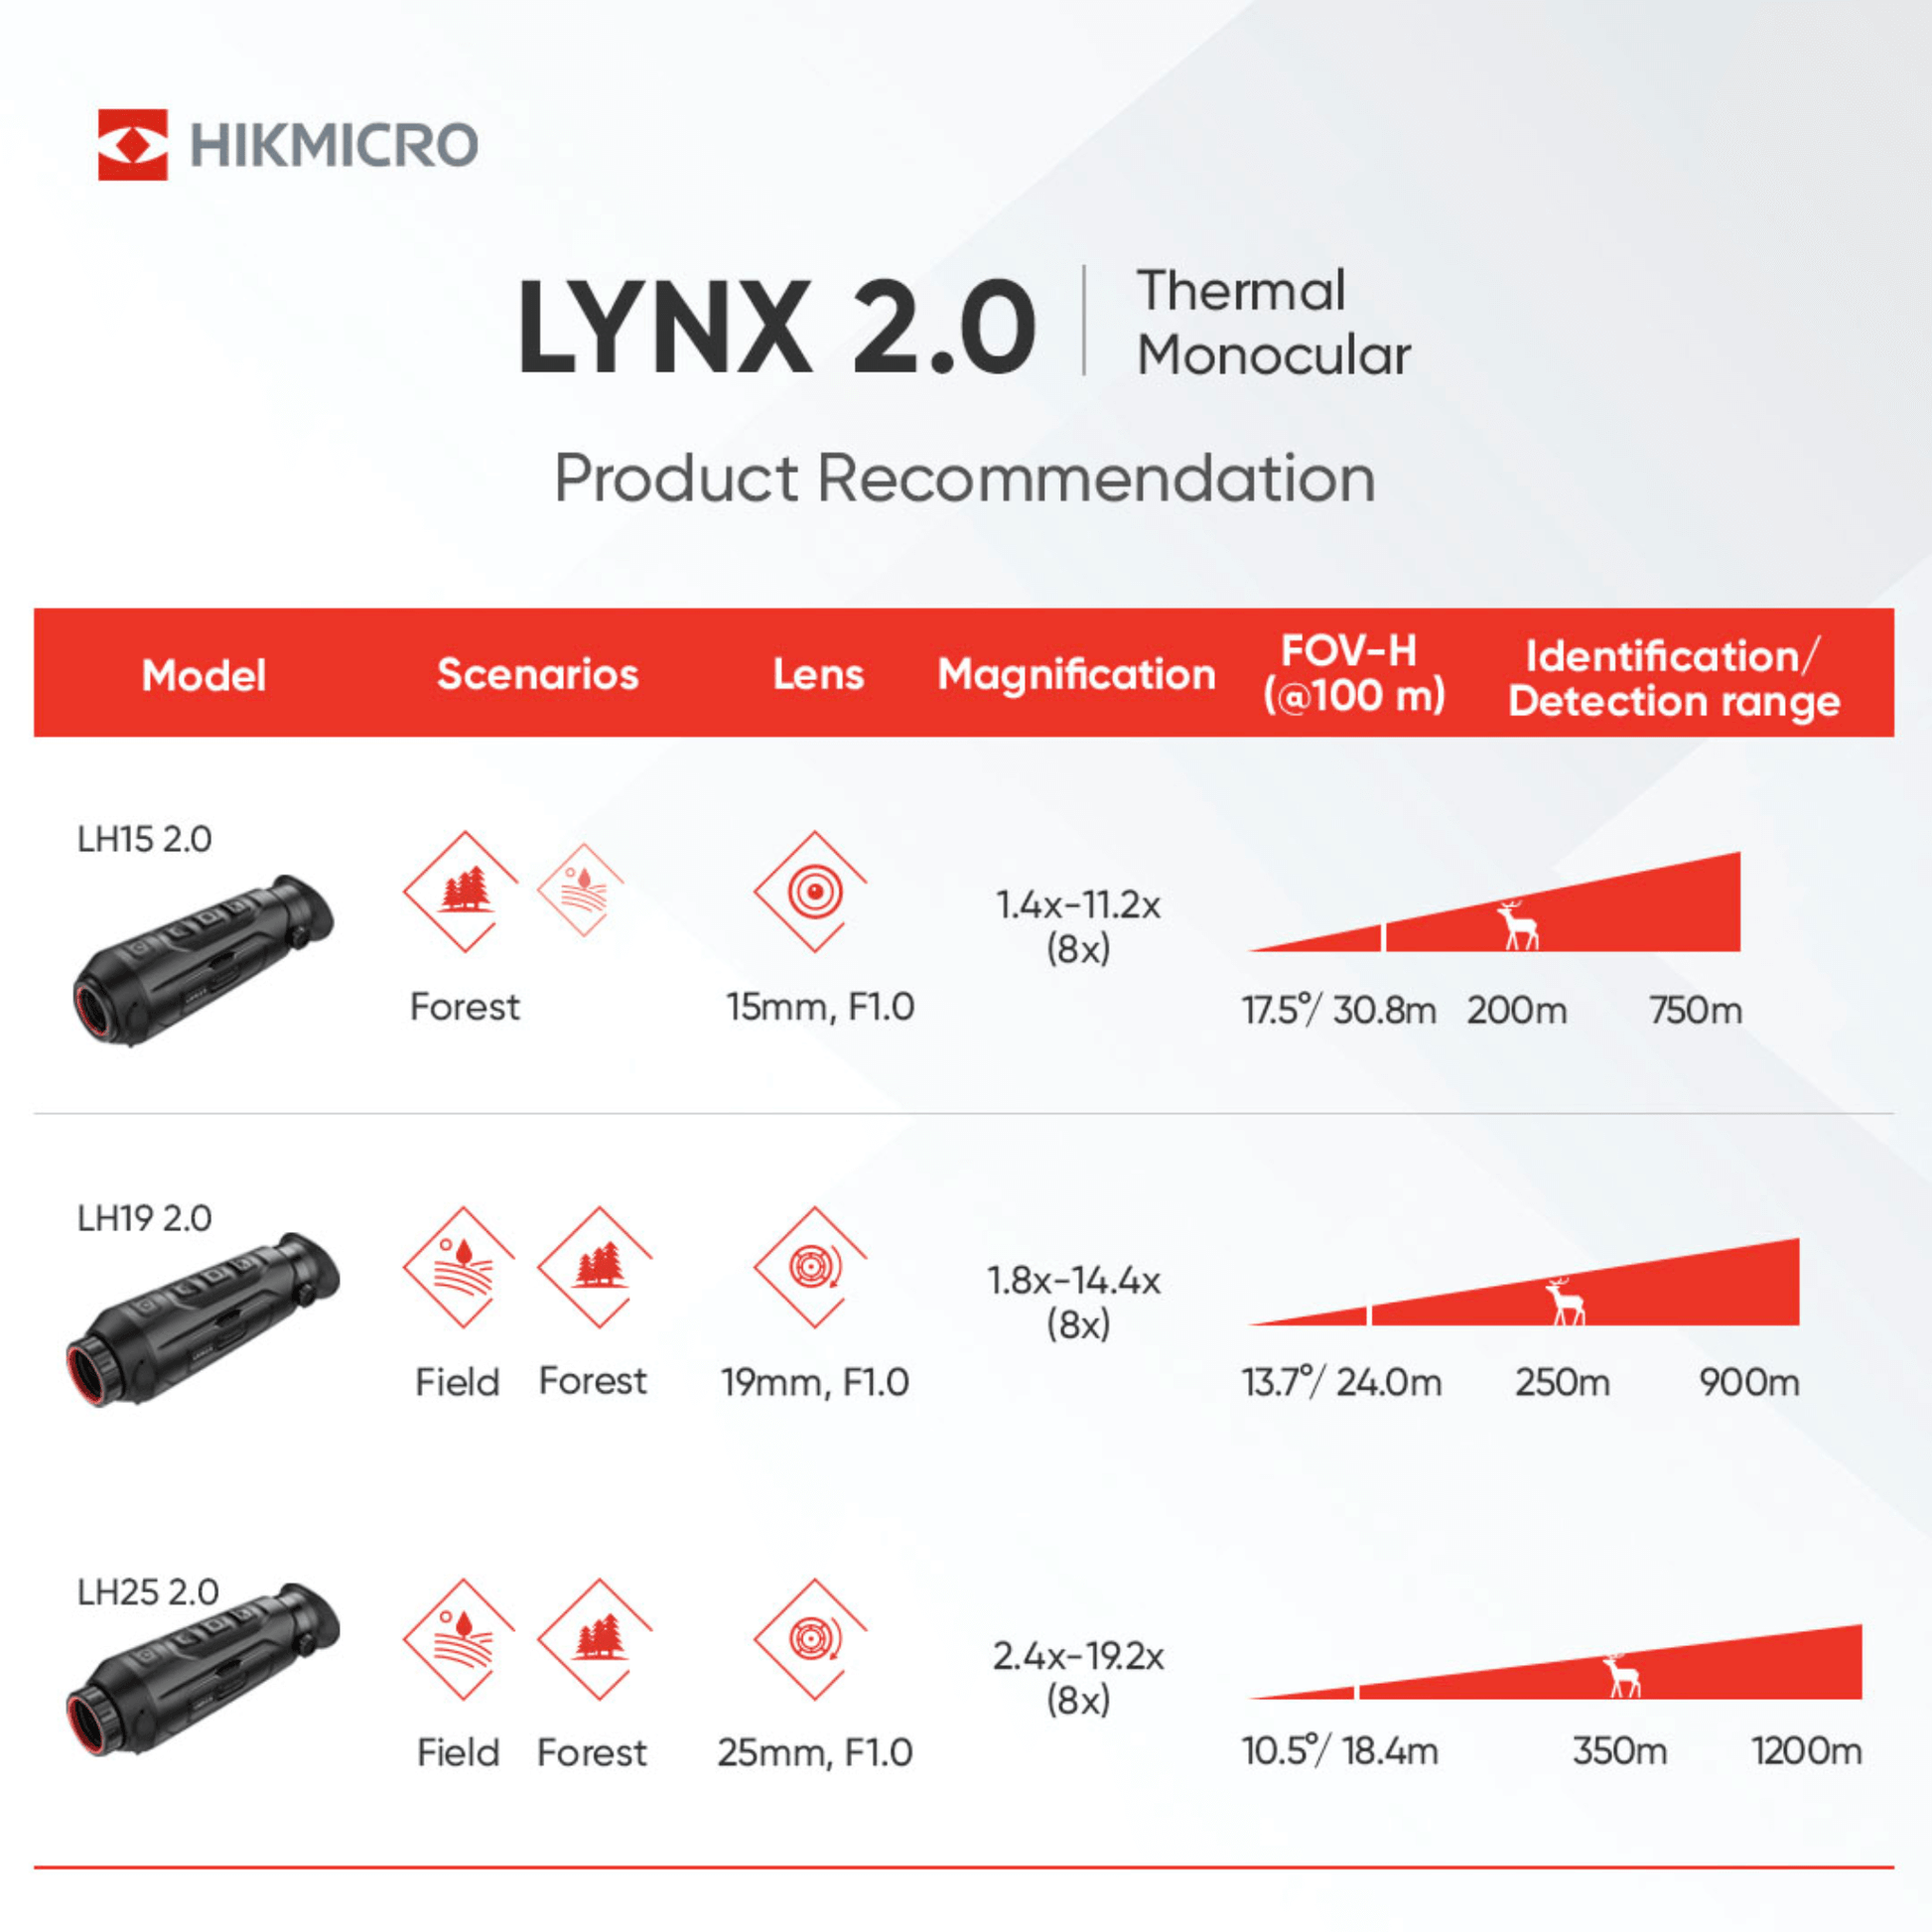 HikMicro Lynx LH15 2.0 range comparison